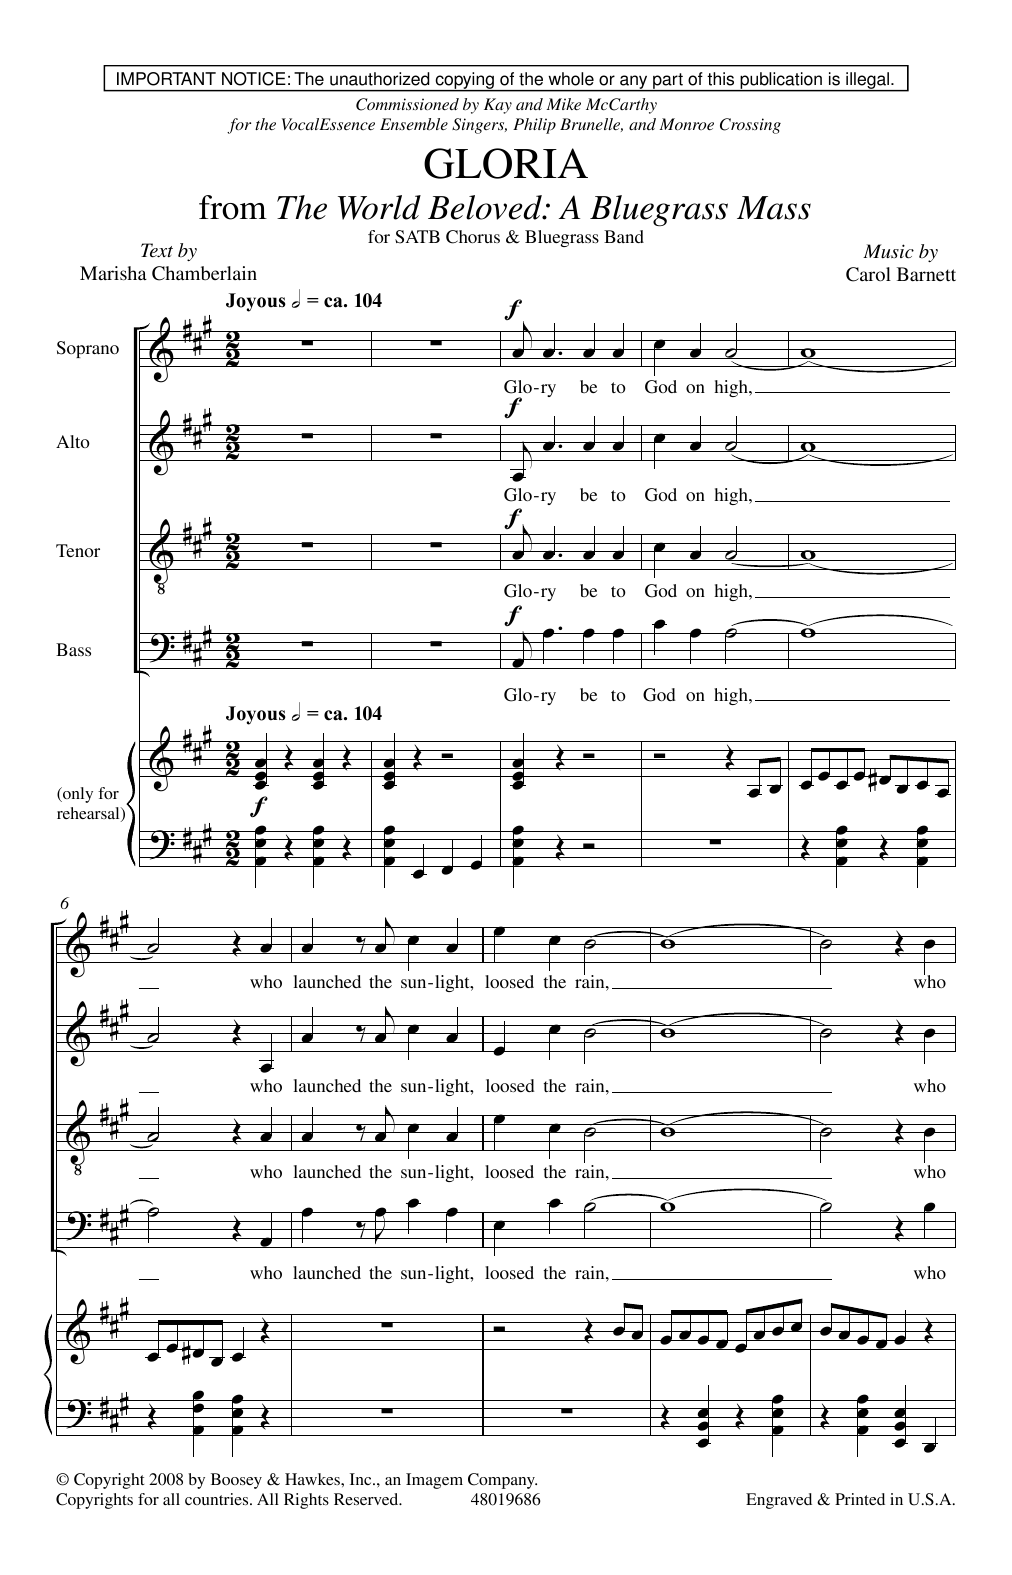 Carol Barnett Gloria (from The World Beloved: A Bluegrass Mass) Sheet Music Notes & Chords for SATB Choir - Download or Print PDF